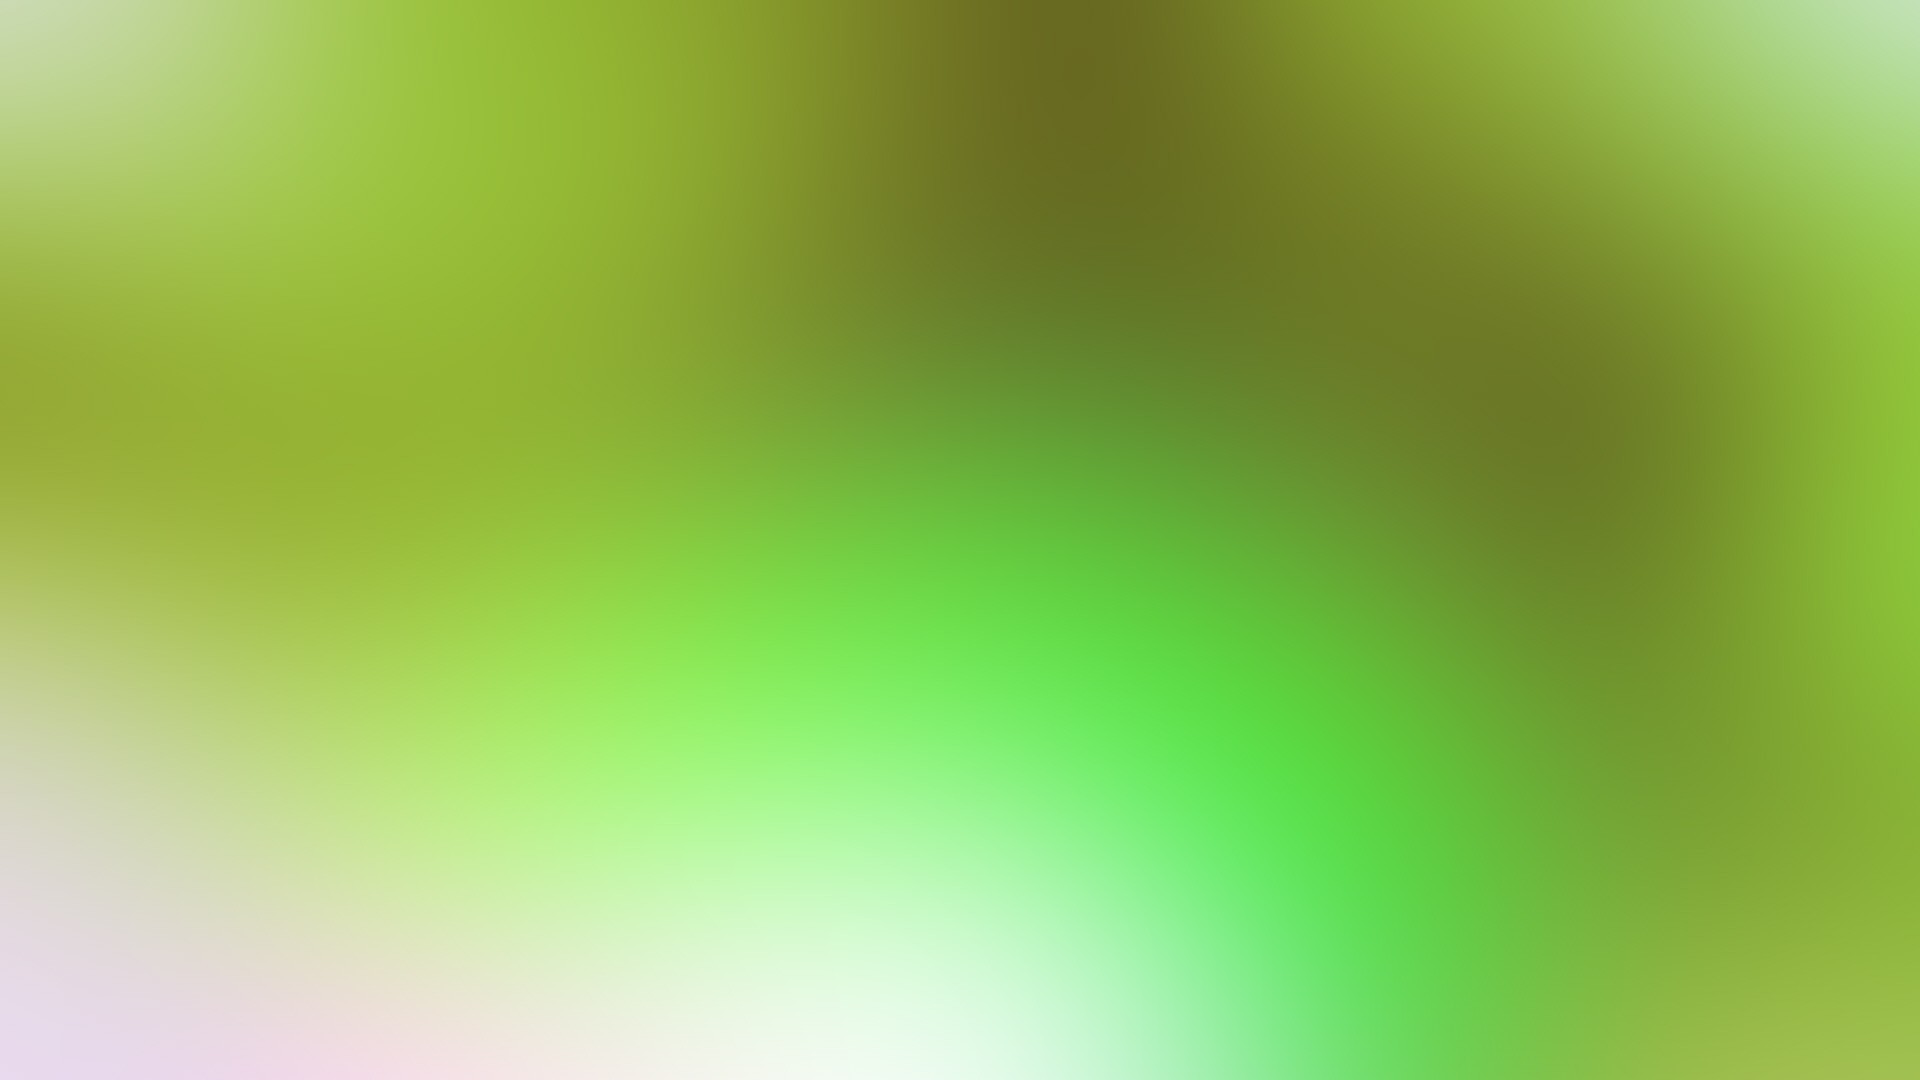 1920x1080 ... Background Full HD 1080p.  Wallpaper green, white, spot